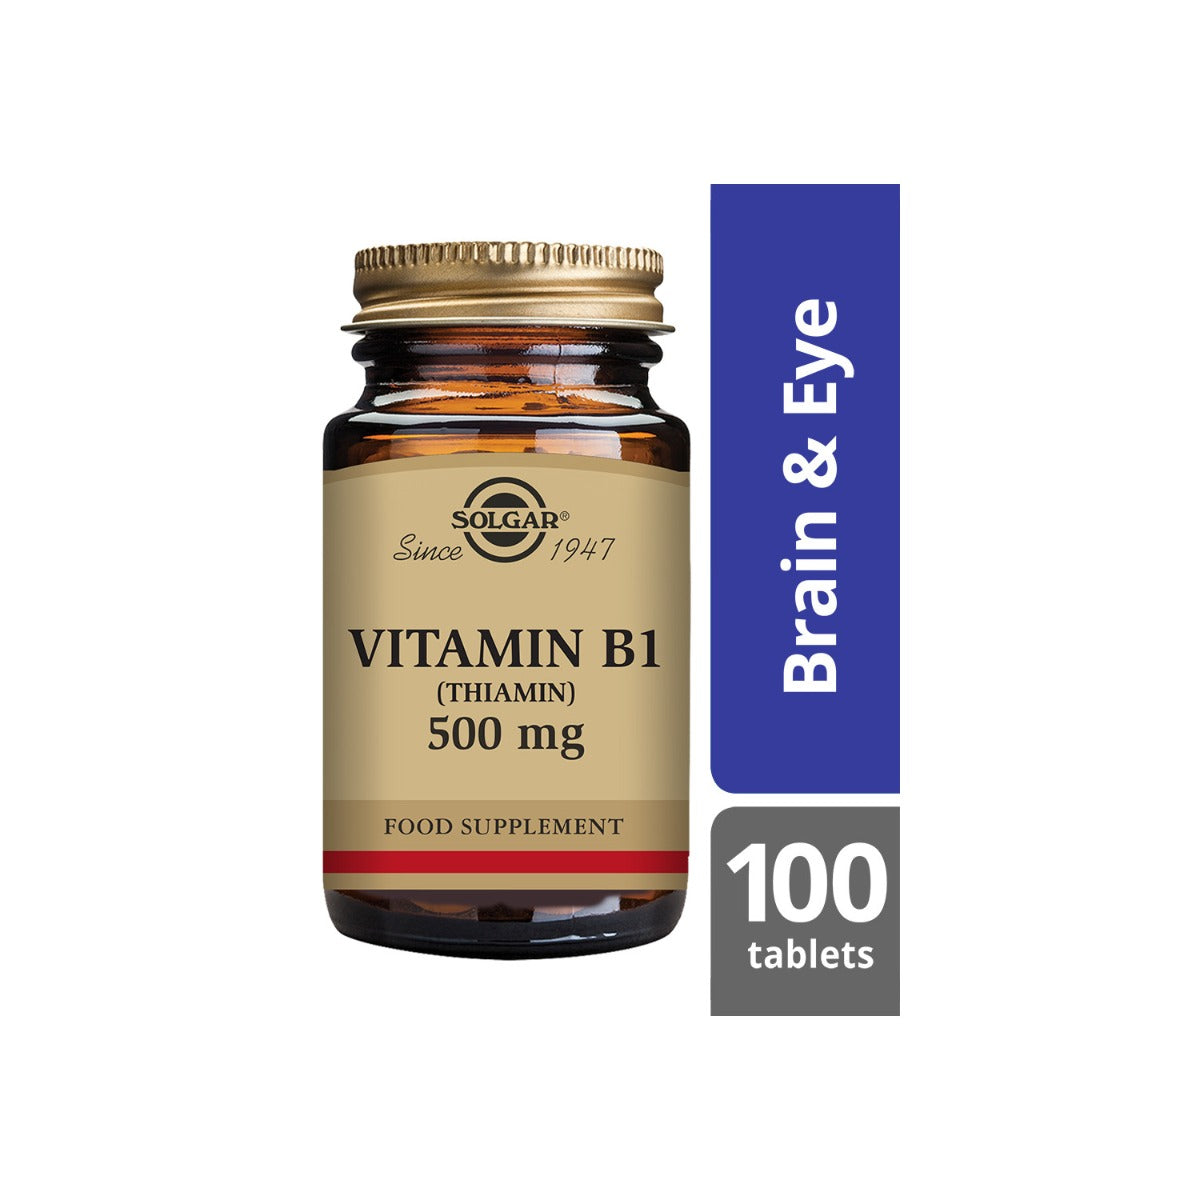 Solgar® Vitamin B1 (Thiamin) 500 mg Tablets  - Pack of 100